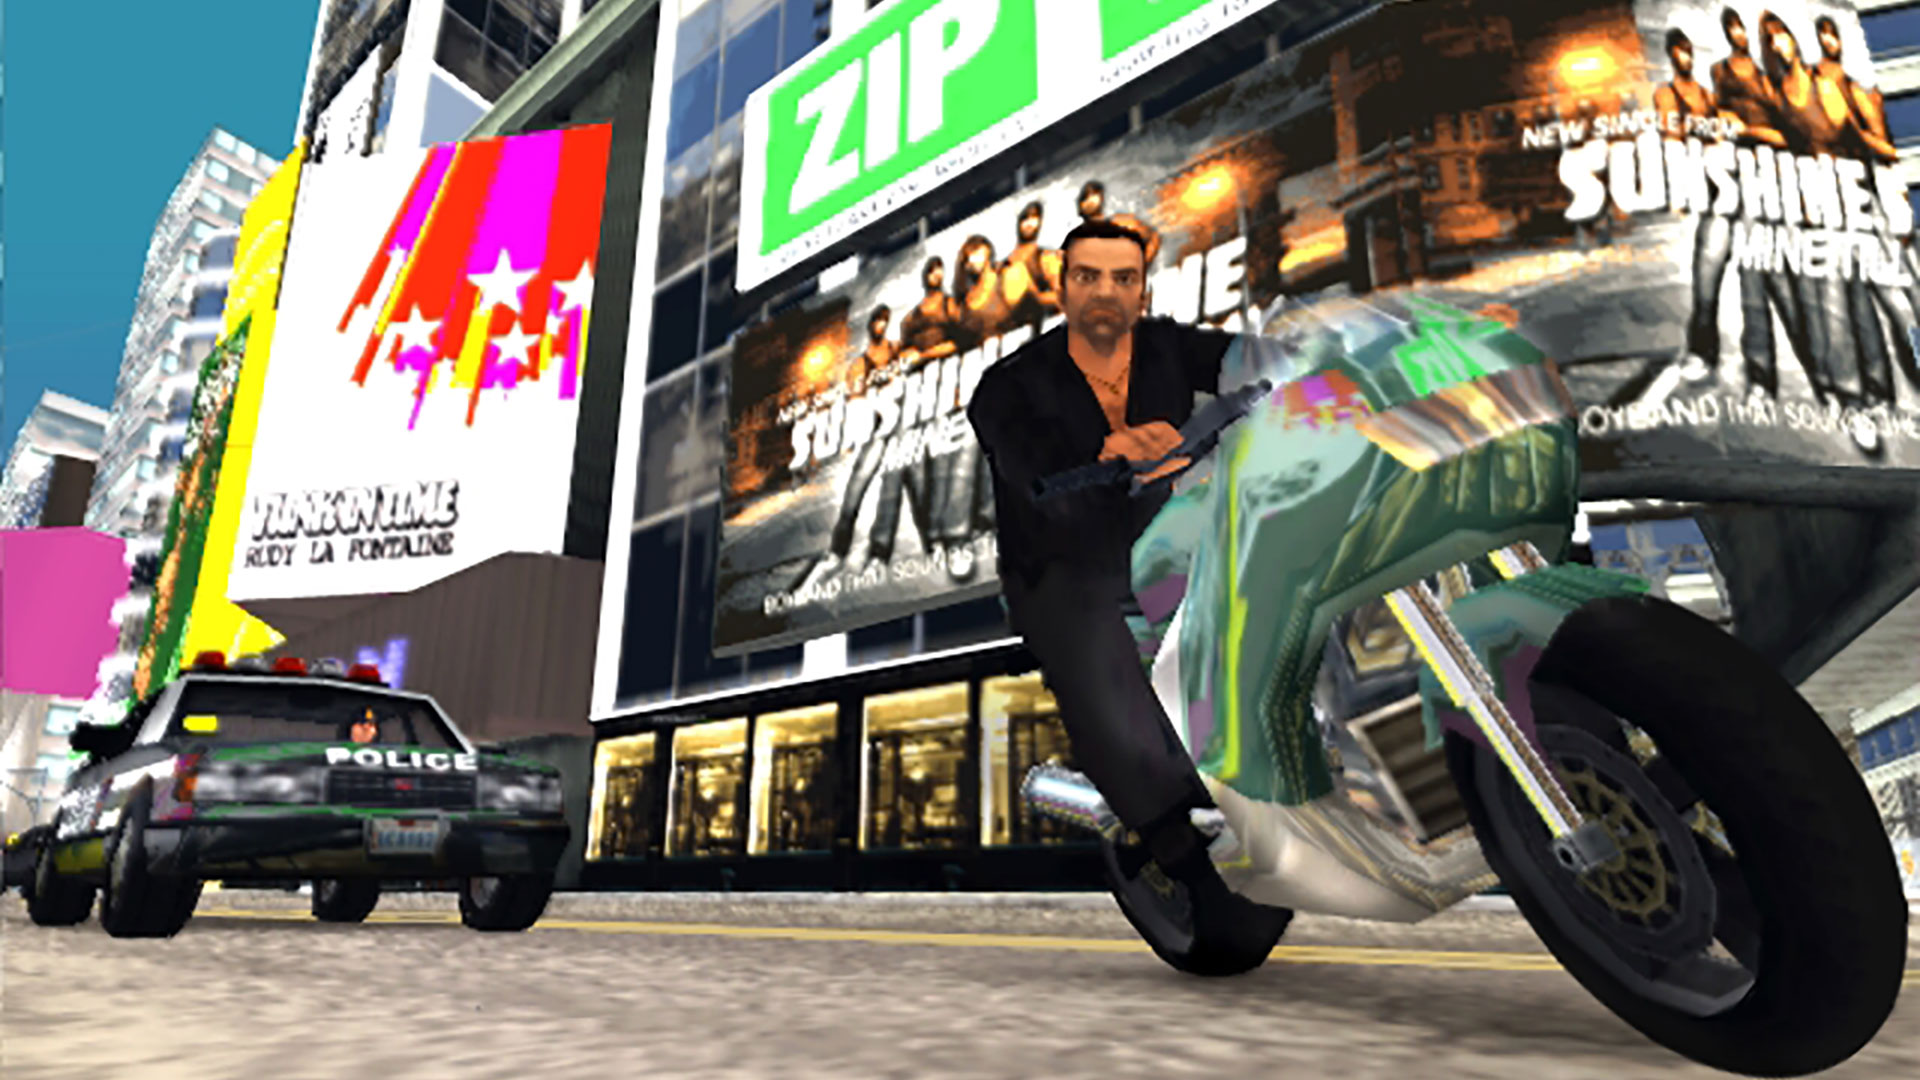 Debug Menu for Grand Theft Auto LCS [Grand Theft Auto: Liberty